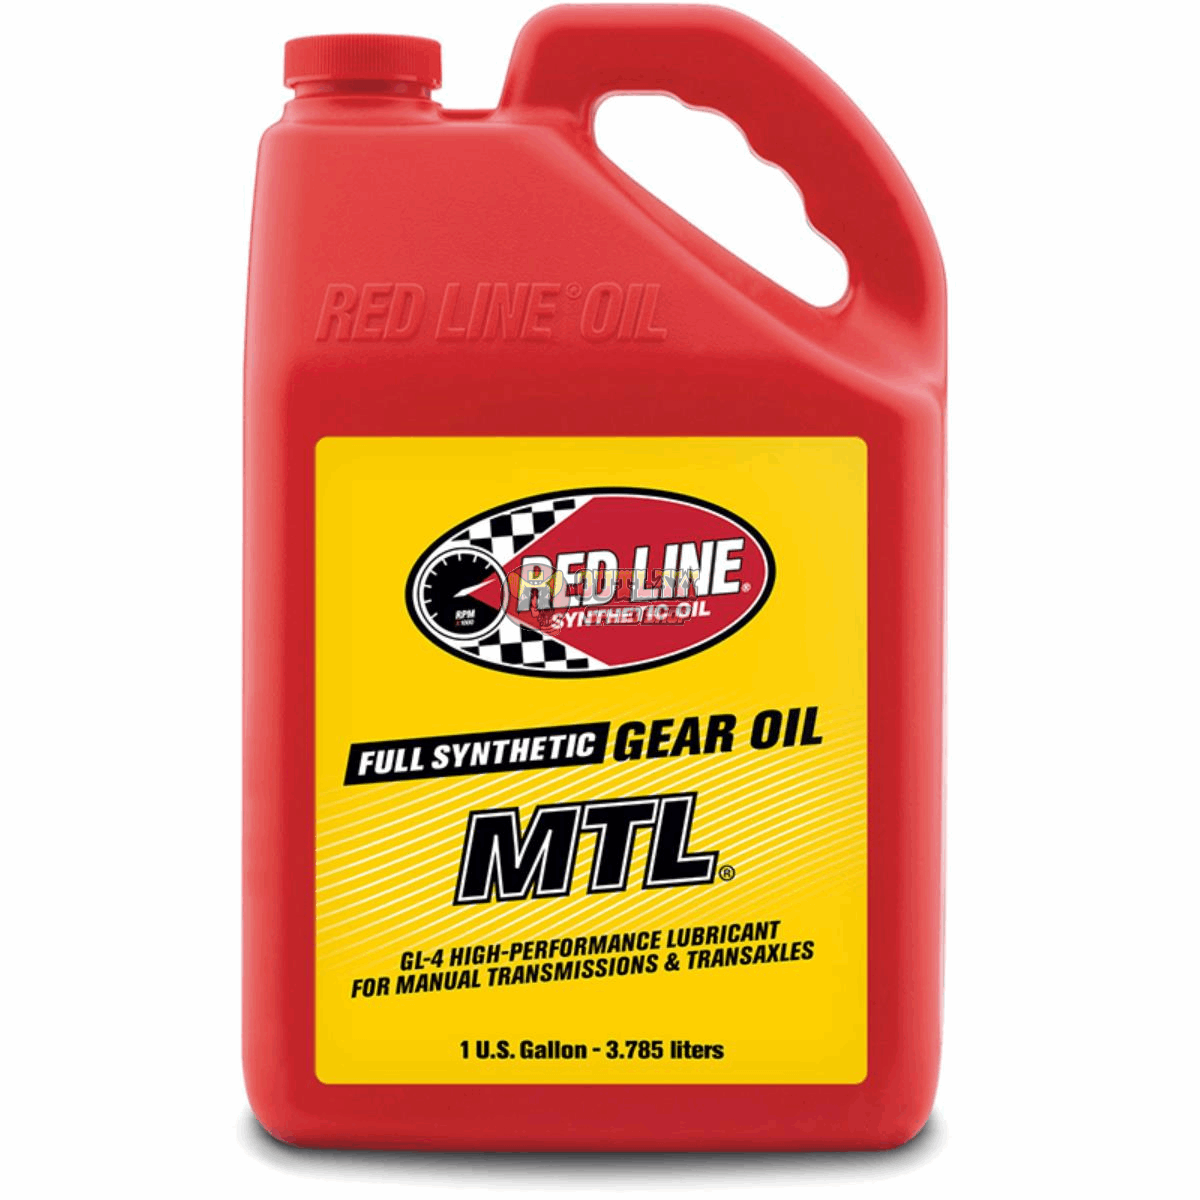 High Red Line Oil Logo - RED50205 OIL MTL 75W80 GL 4 GEAR OIL 1 GALLON (3.785 LITRES)